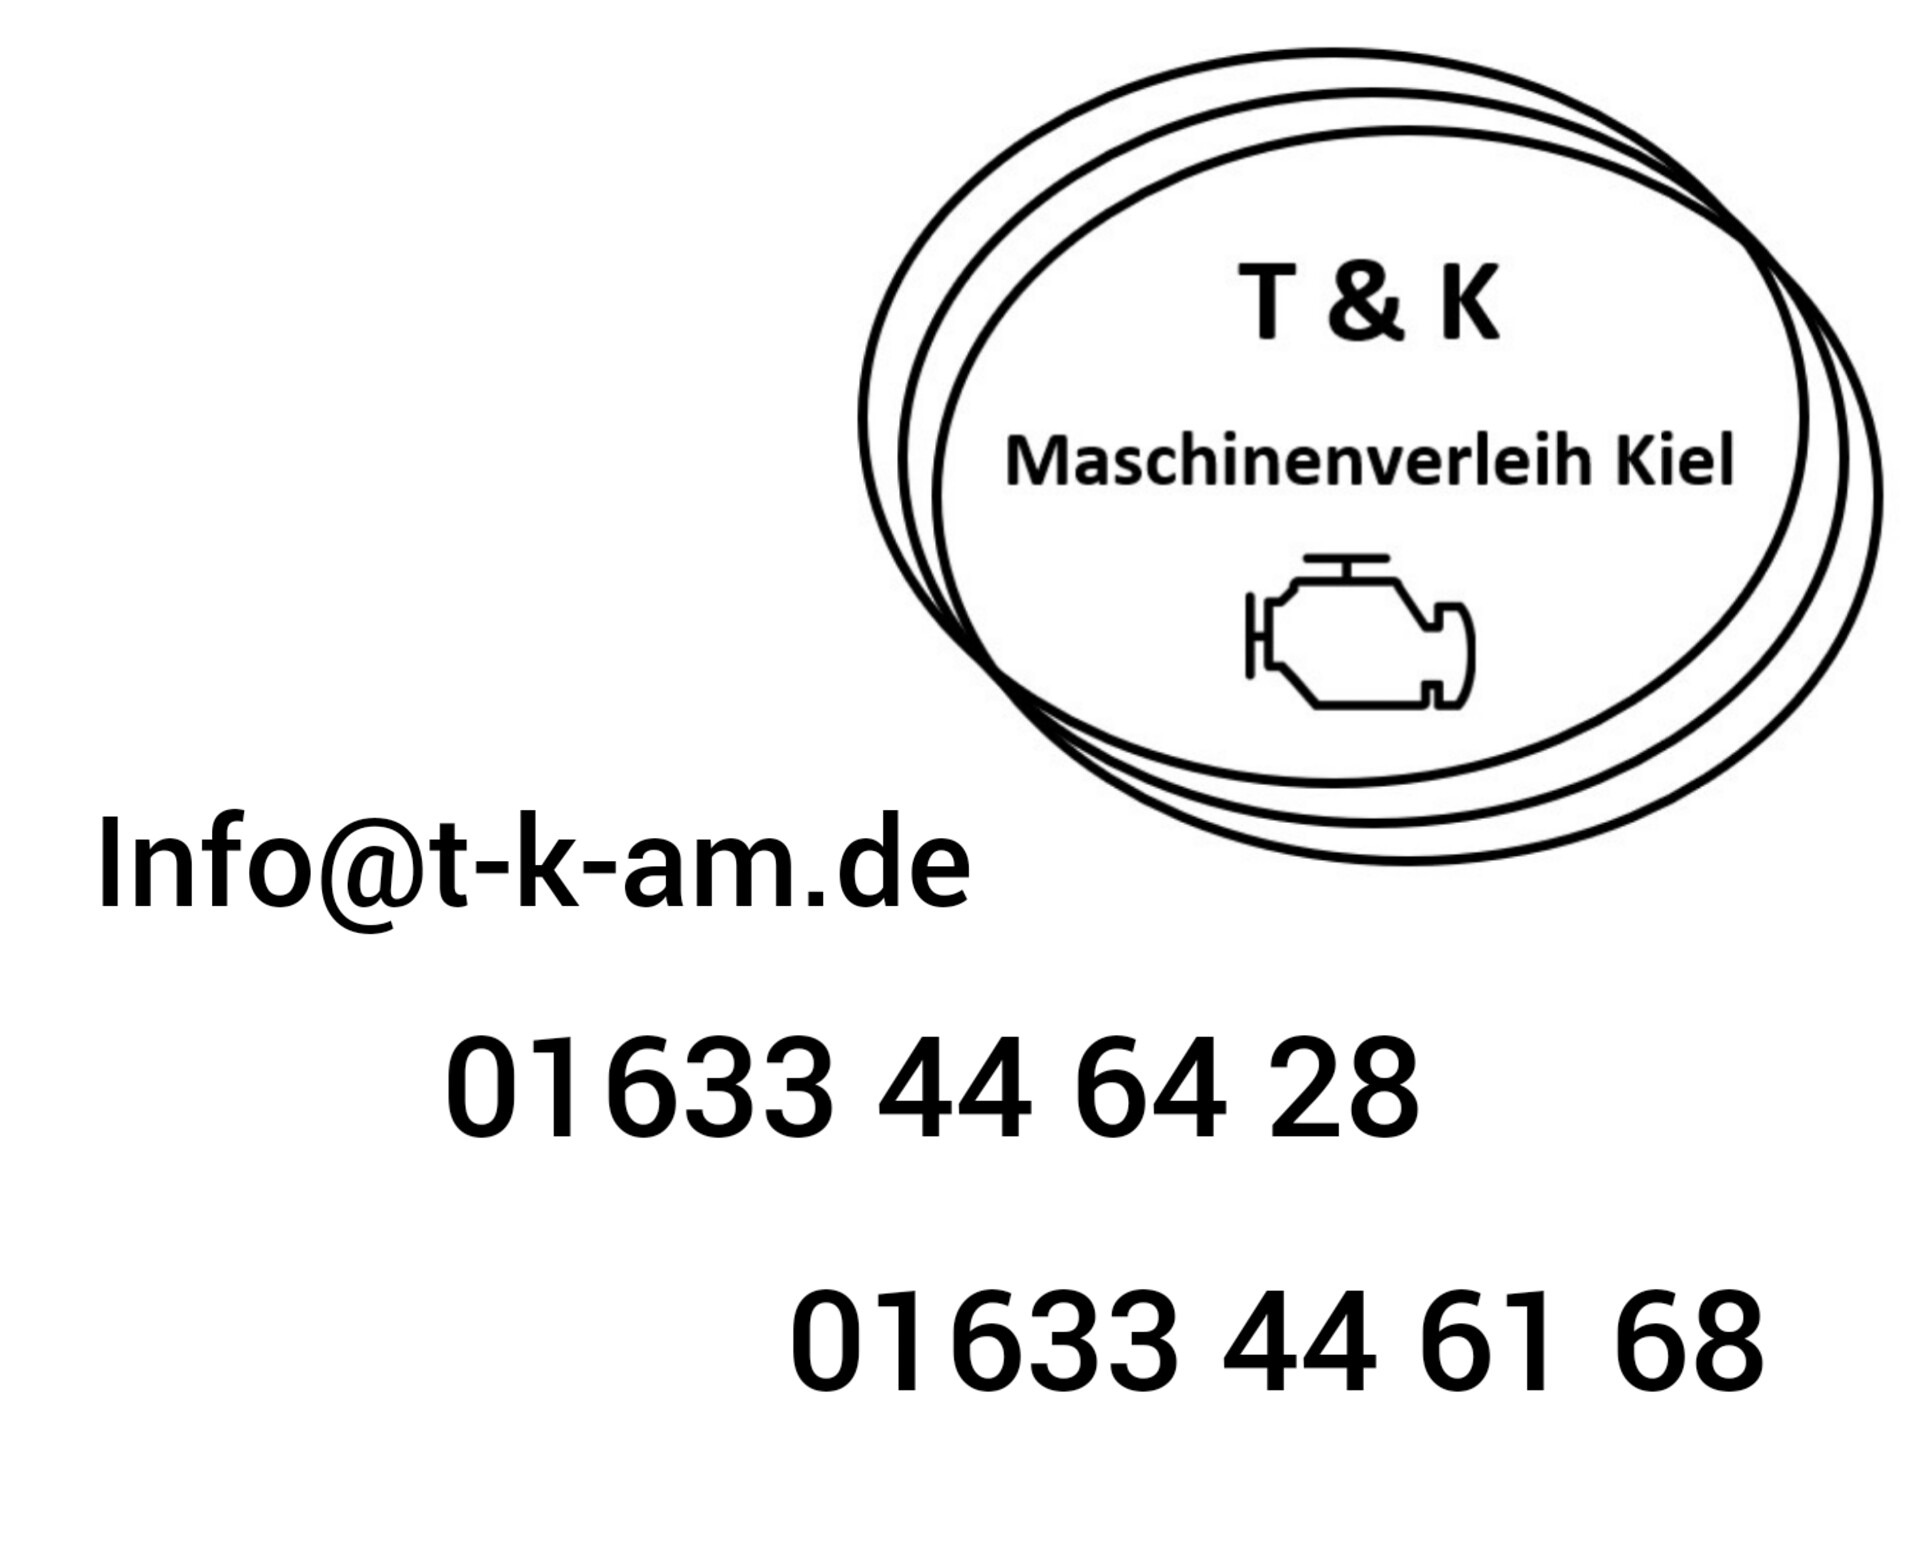 Logo T&K Maschinenverleih Kiel mit Kontaktdaten